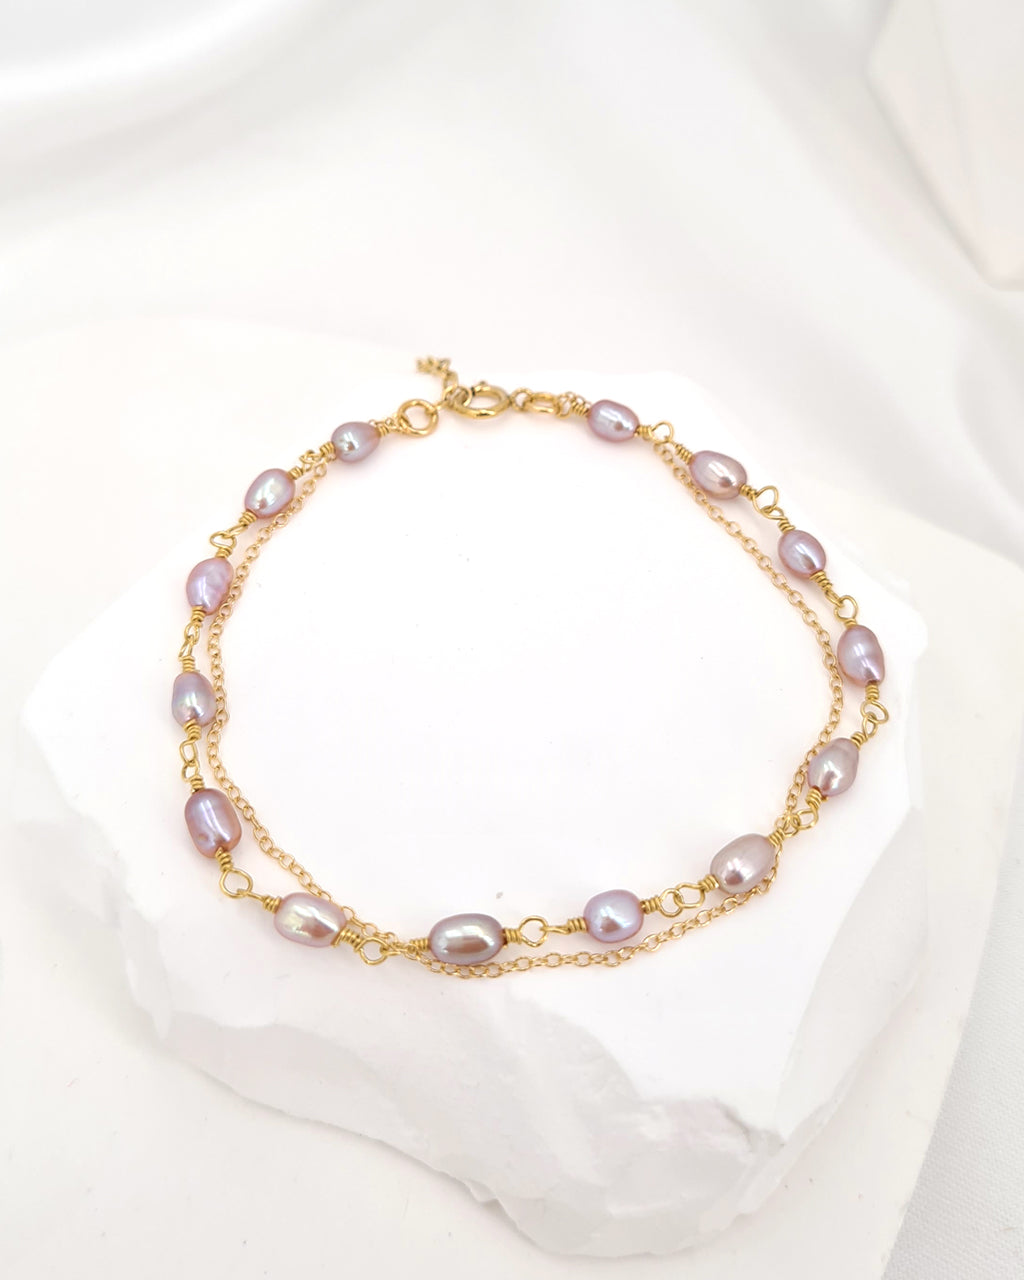 Tiny Pearl Bracelet - Small Purple Pearl 14k Gold Filled Bracelet Handmade in Singapore